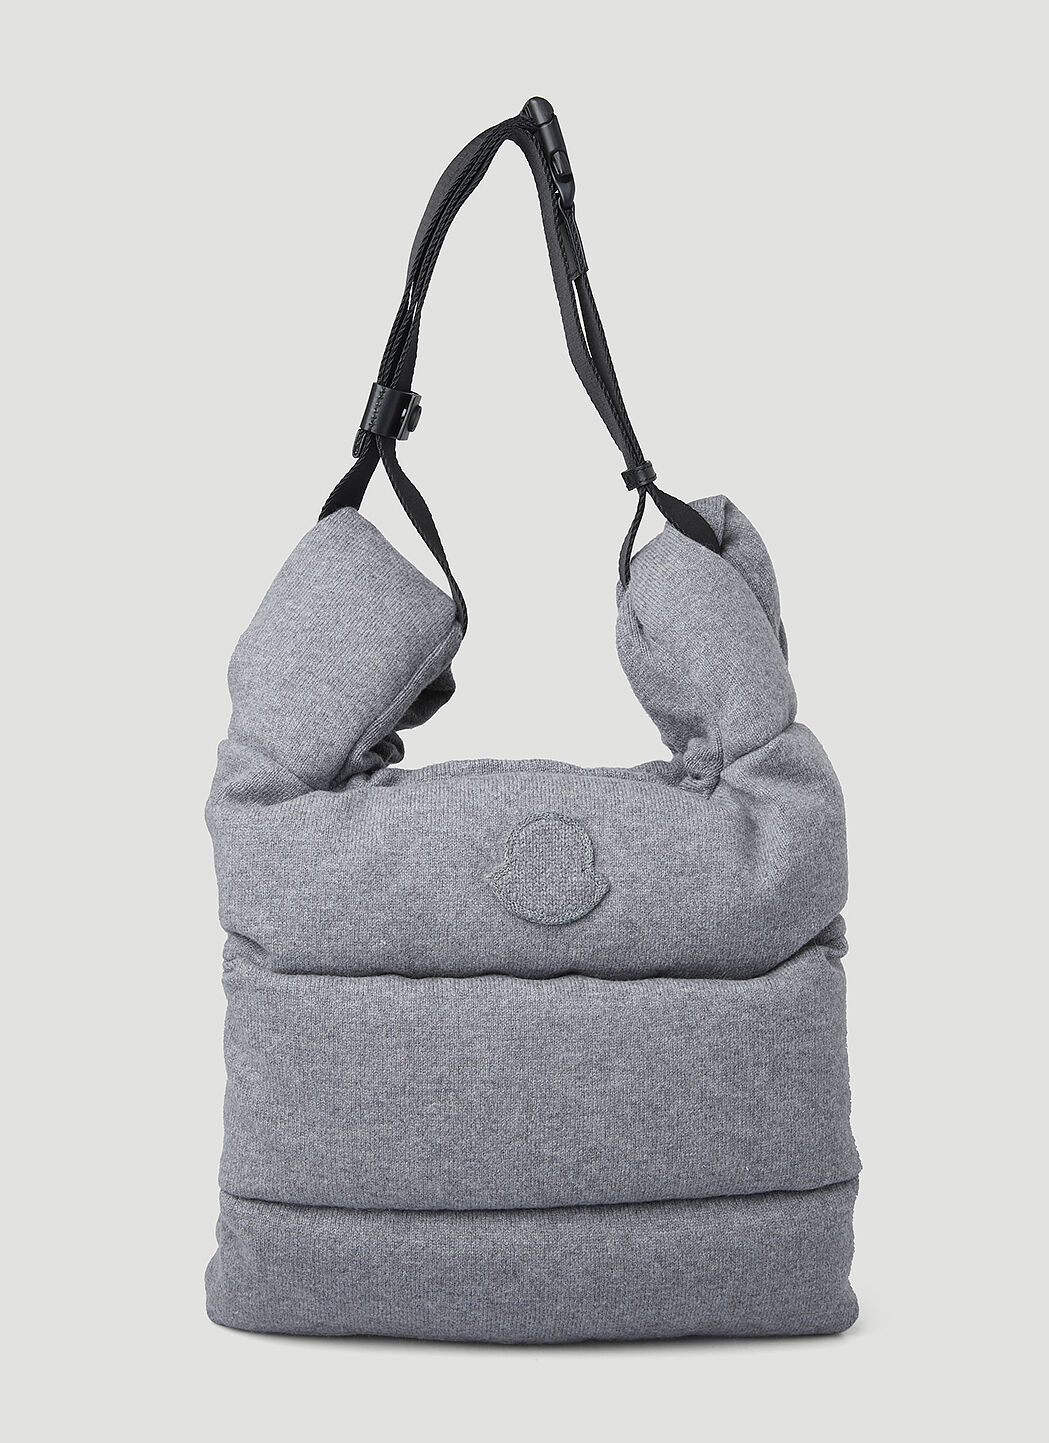 Moncler New Legere Medium Tote Bag in Grey | LN-CC®